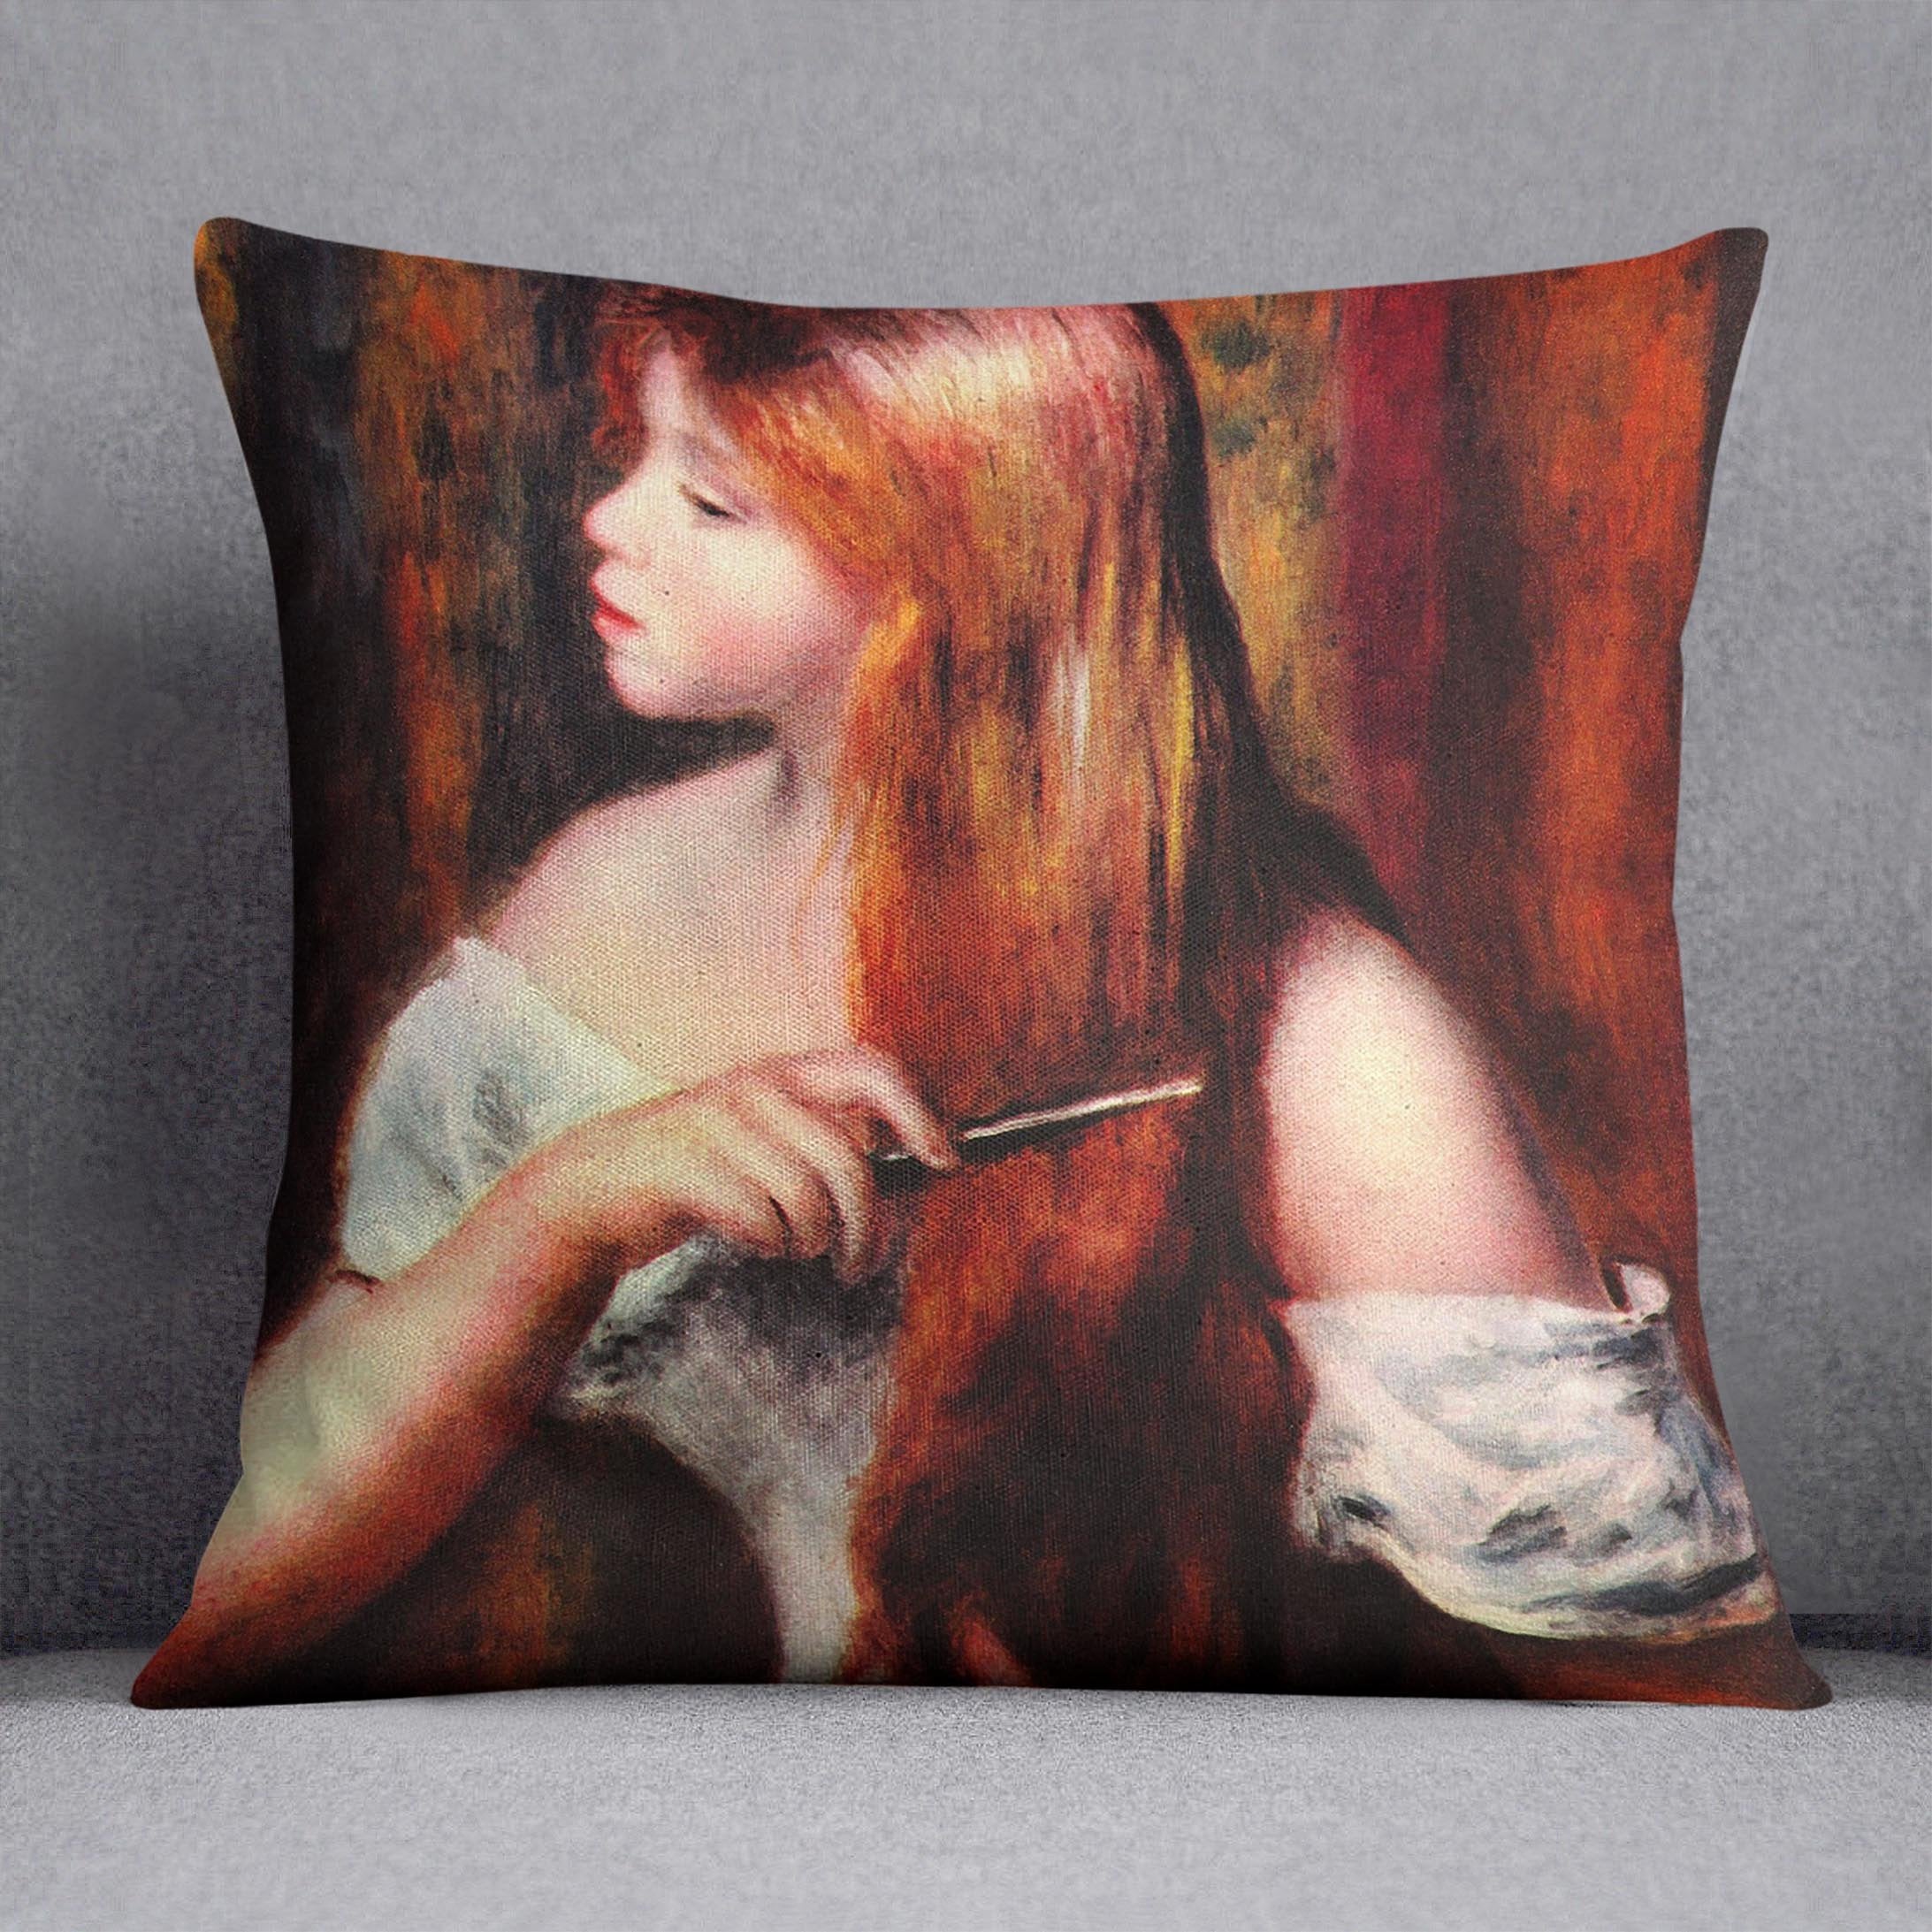 Combing girl by Renoir Throw Pillow